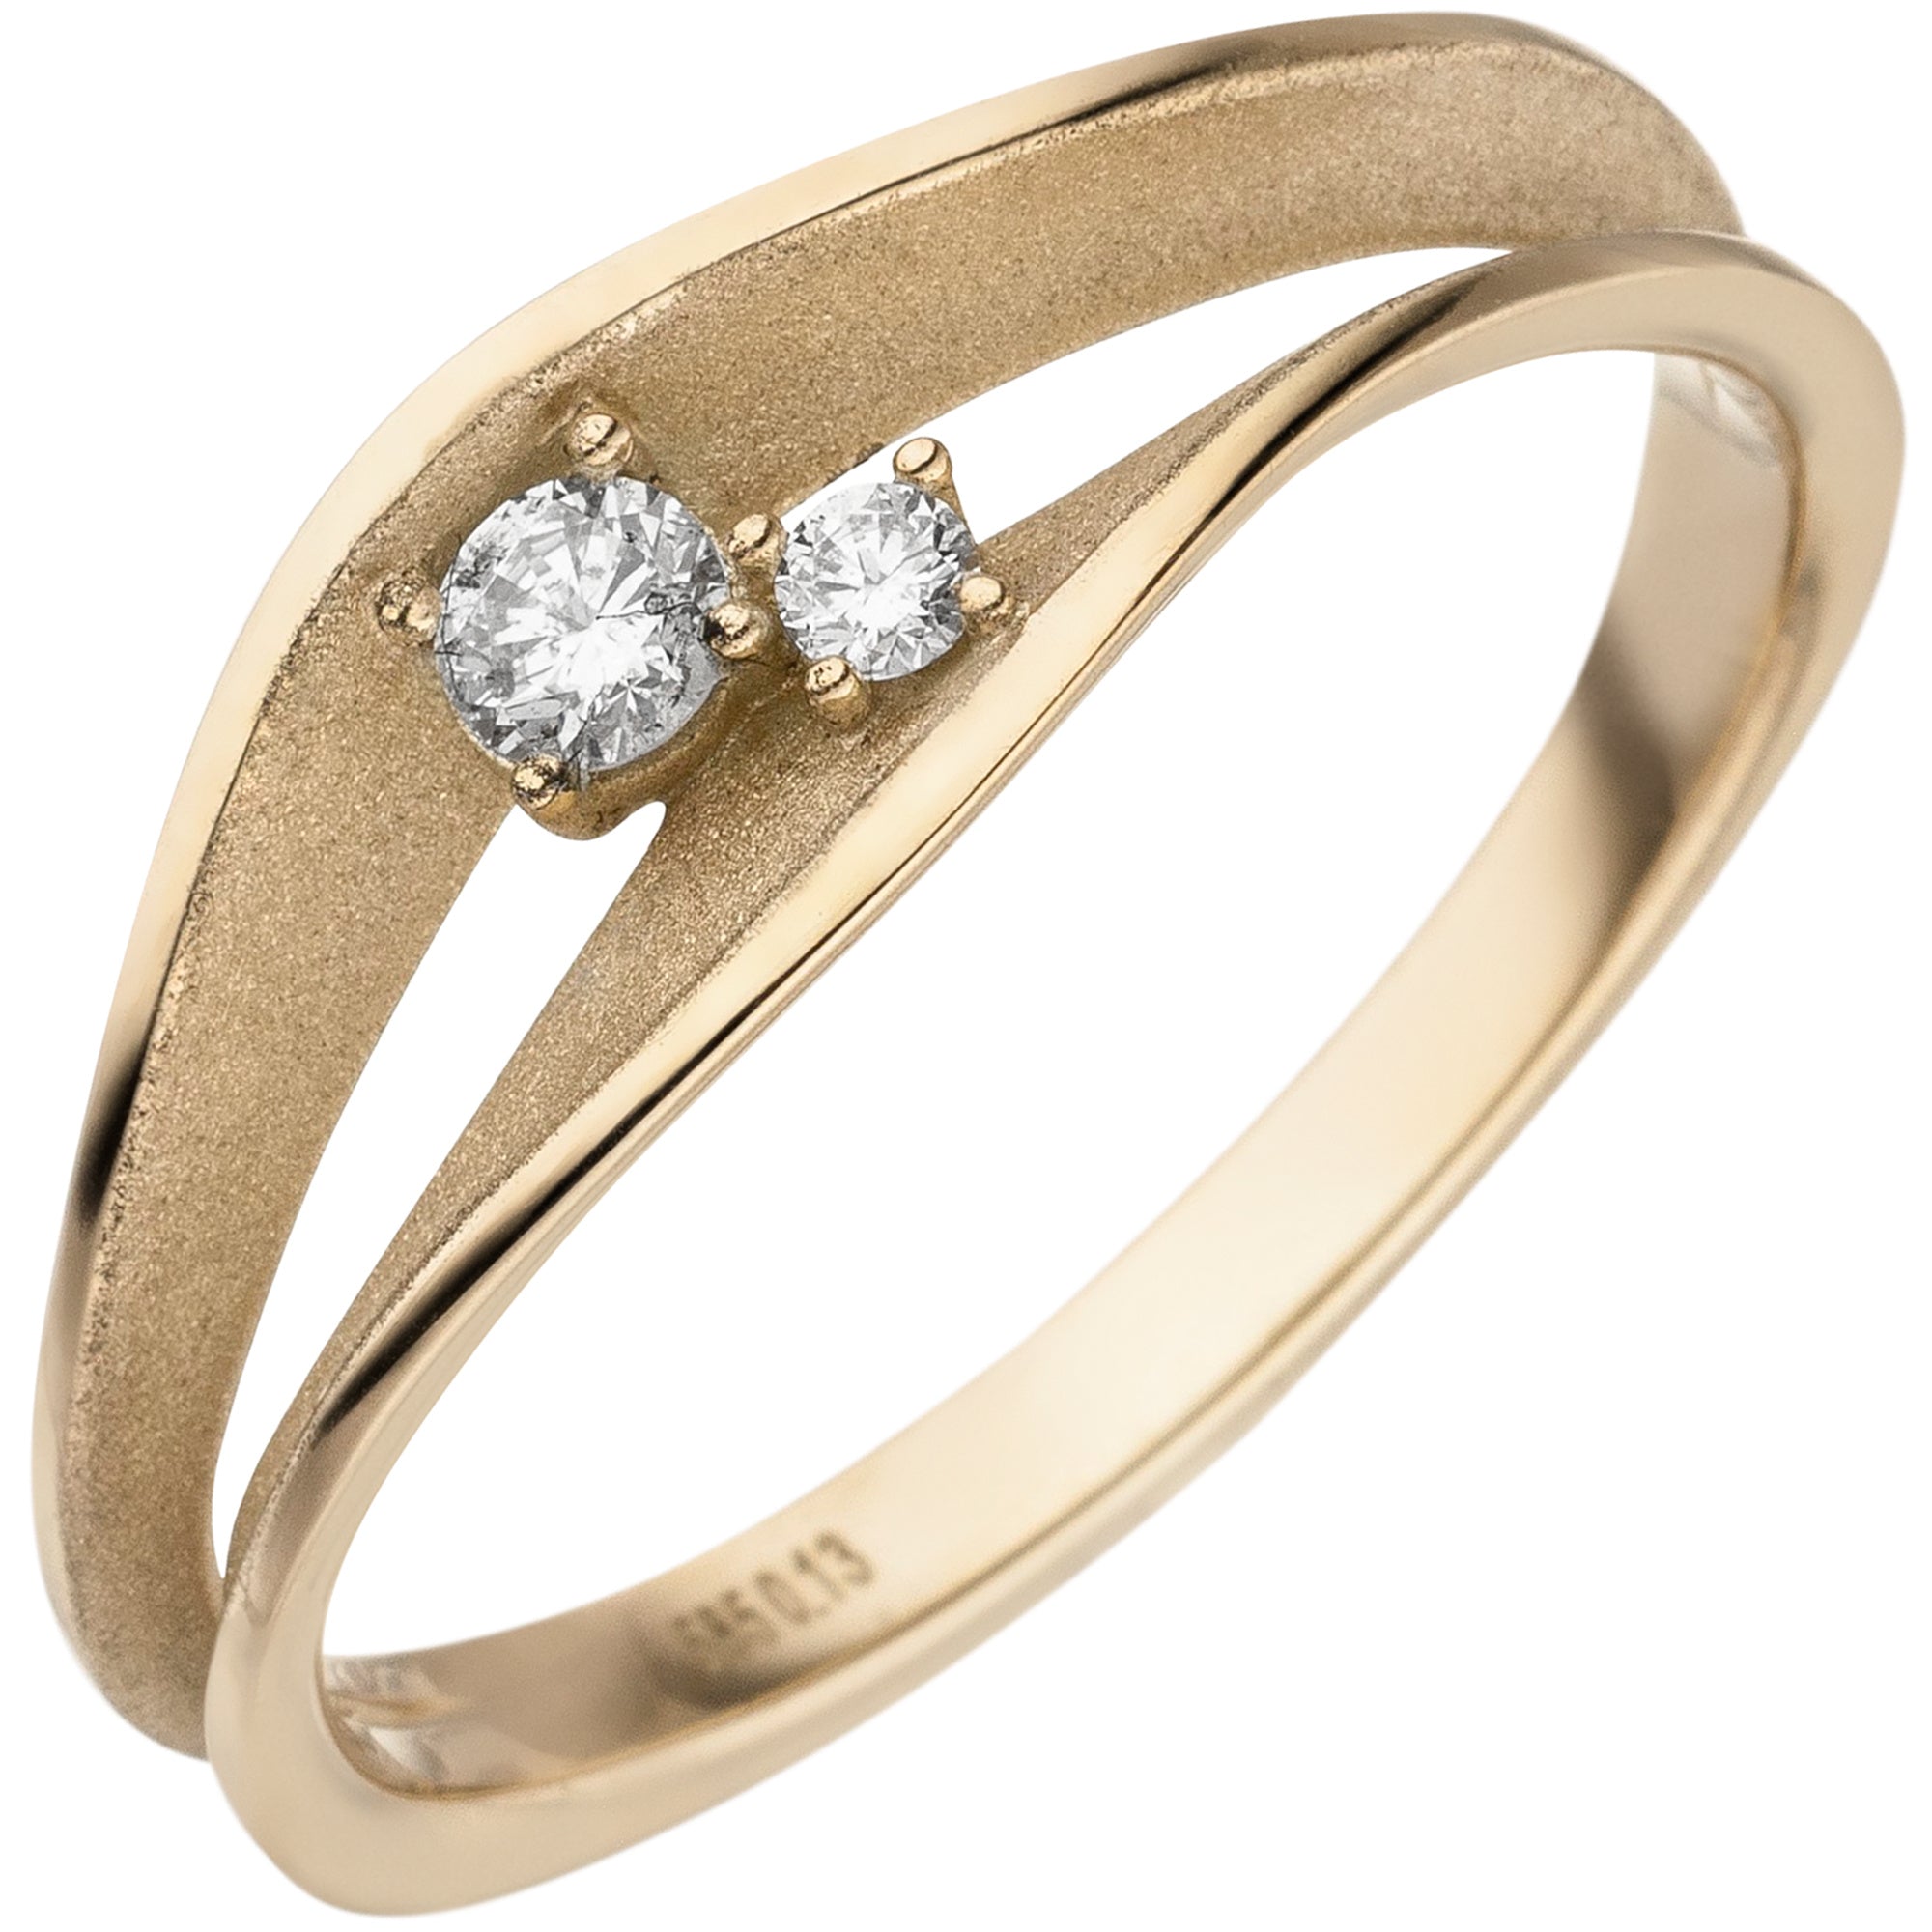 Damen Ring 585 Gold Gelbgold teil matt 2 Diamanten Brillanten | MICHEL  Juweliere & Uhrengeschäfte